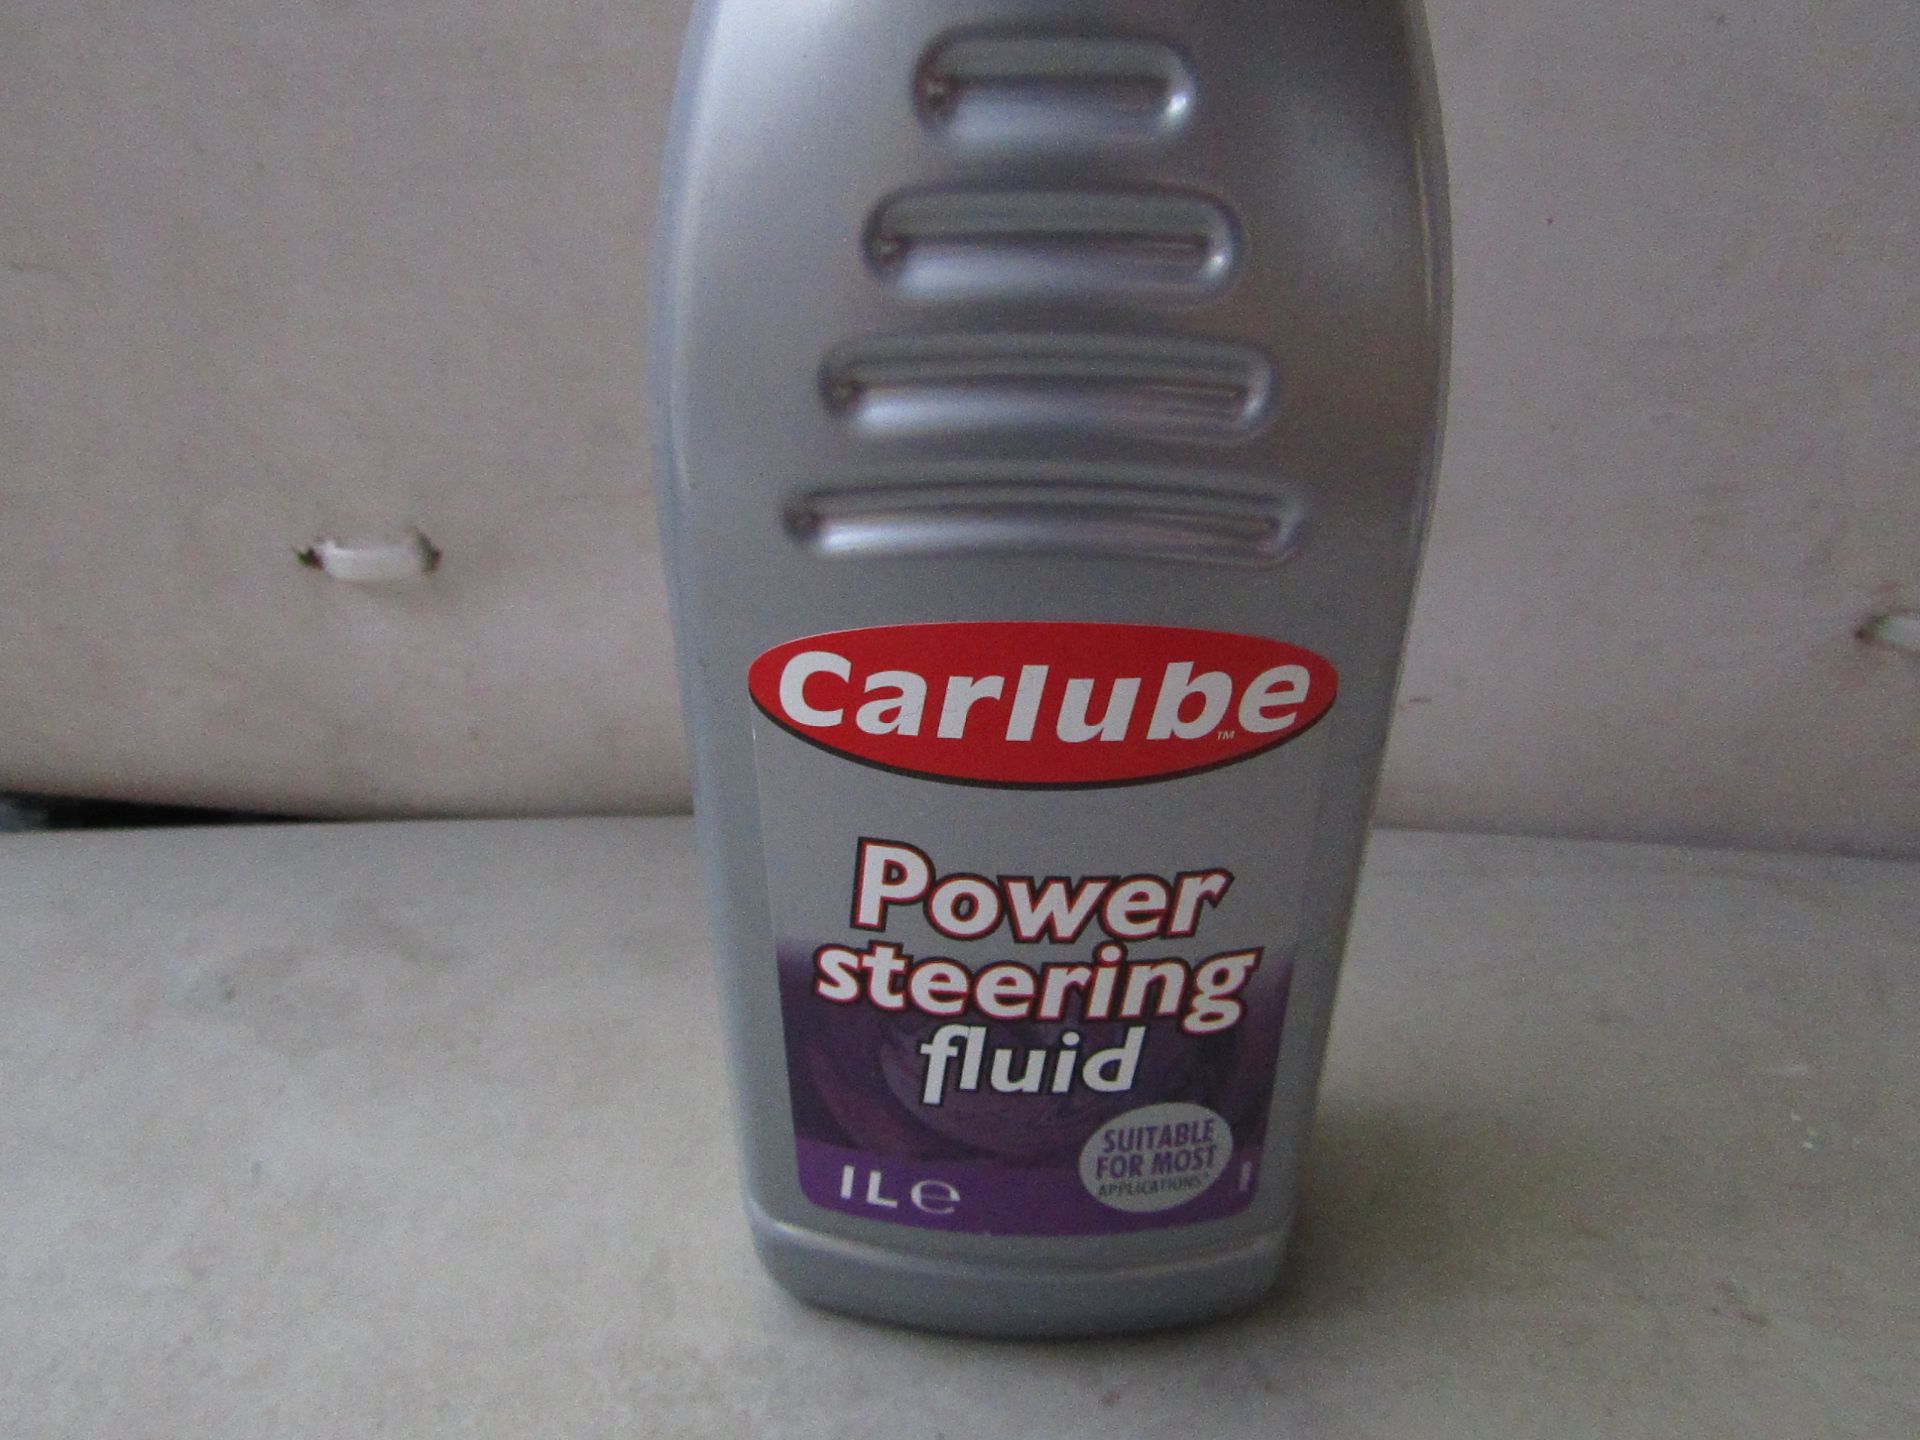 CarLube - Power Steering Fluid - 1 Litre - Sealed.